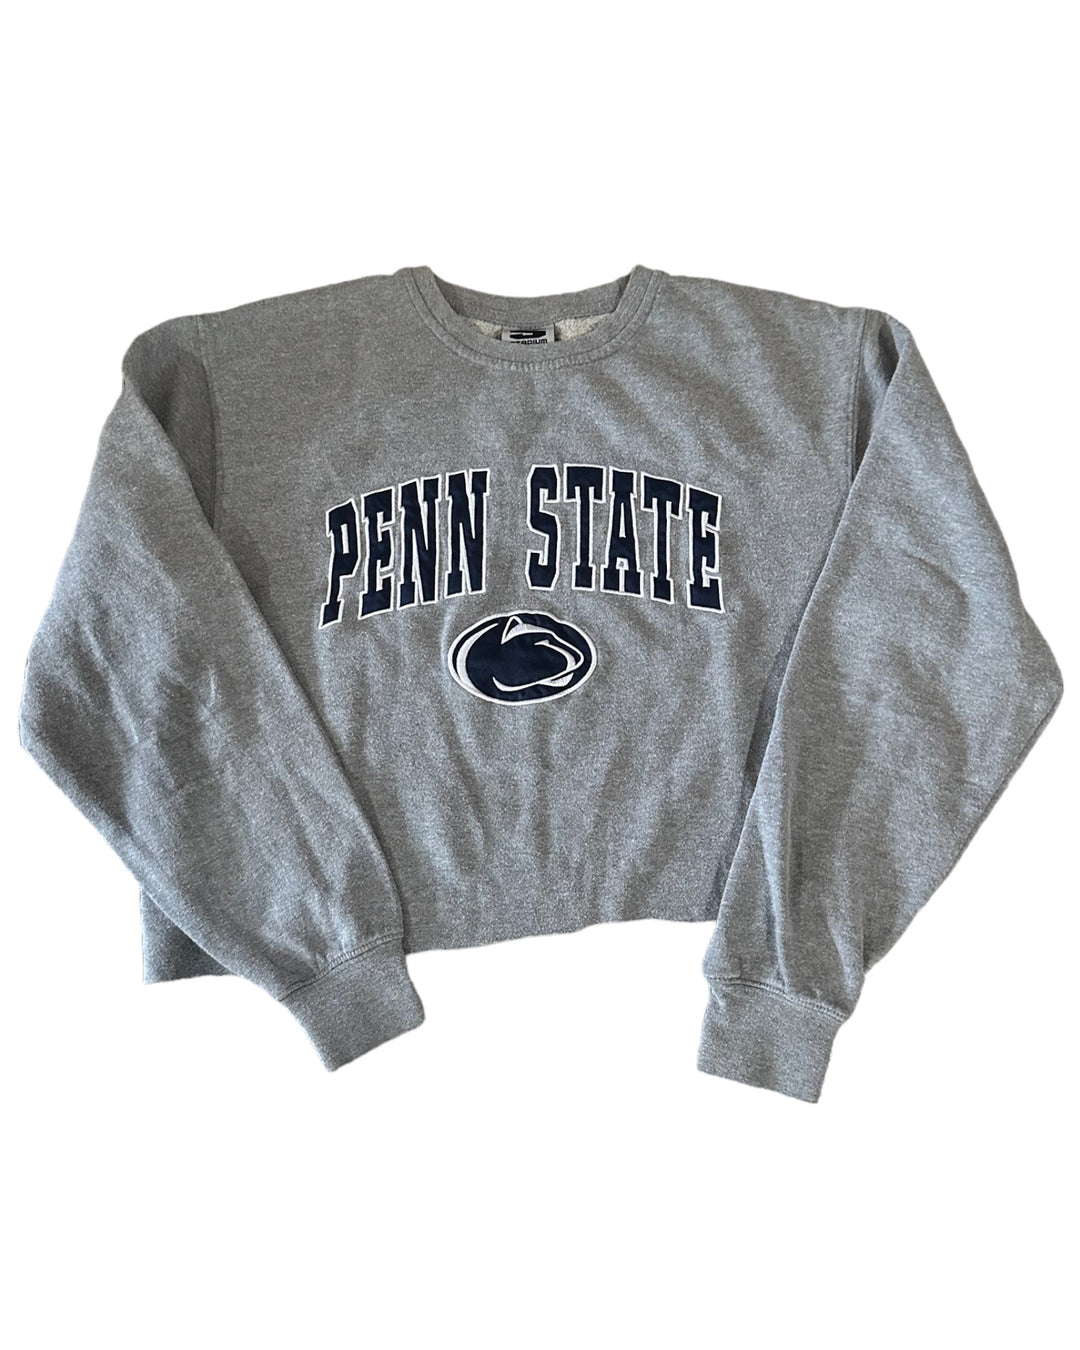 Penn State Vintage Cropped Sweatshirt